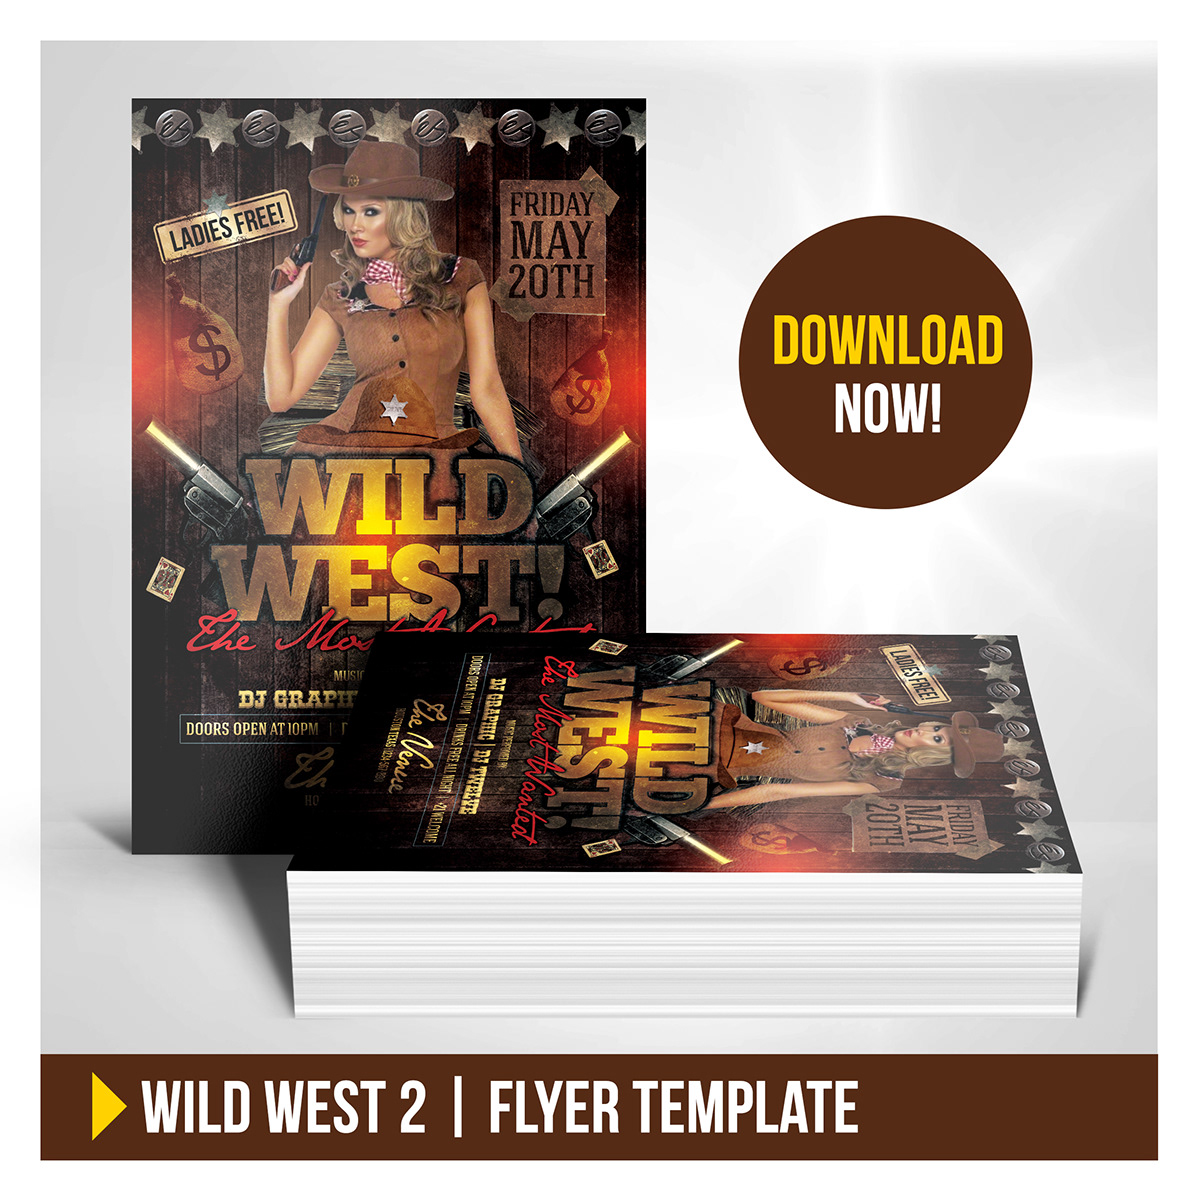 wild west cowboy desert flyer template louis twelve psd creative luxury Vip jaripeo the most wanted Saloon western